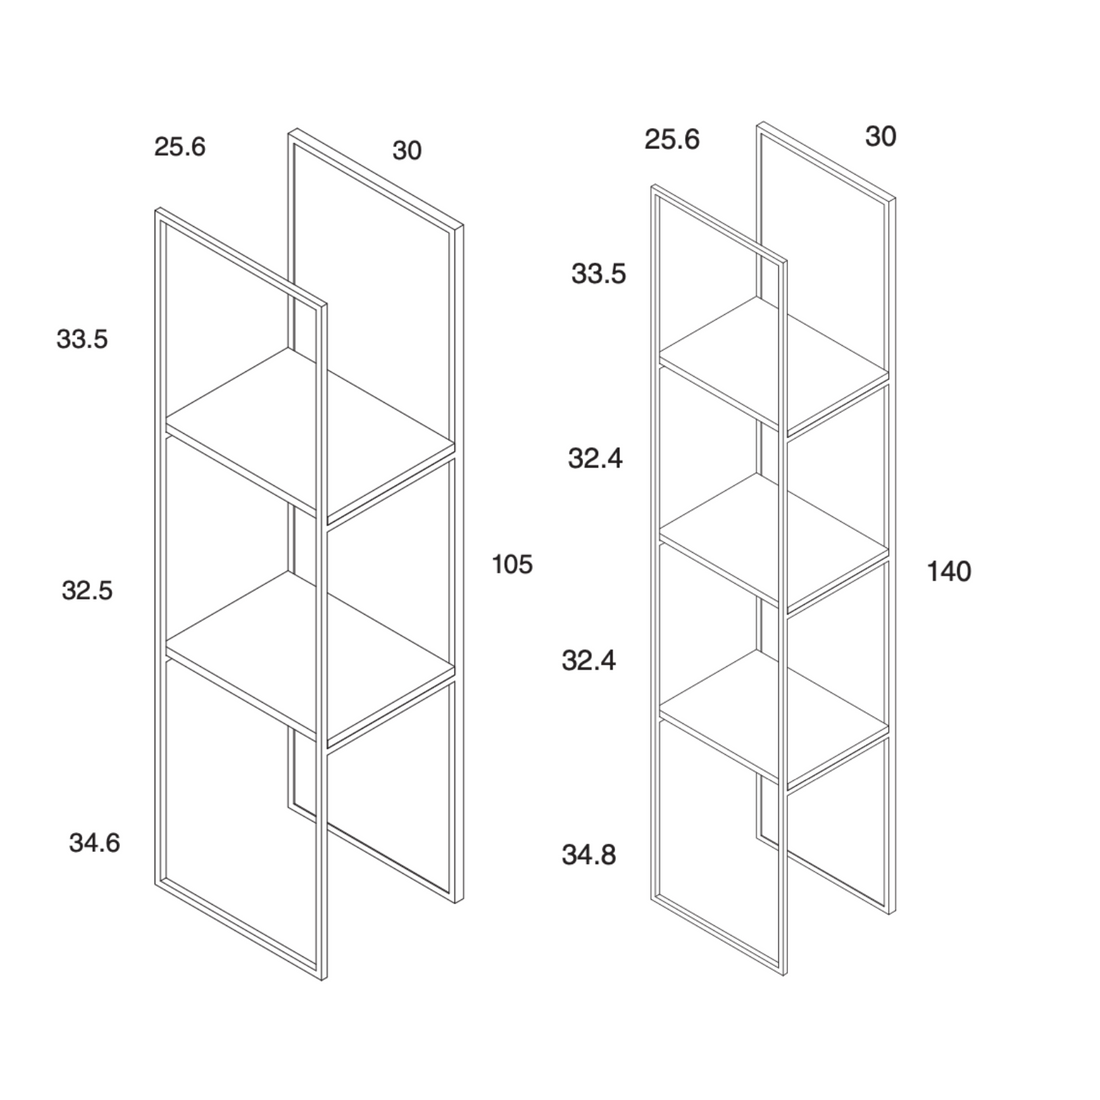 MOBENIA Pin Shelves Dimensions